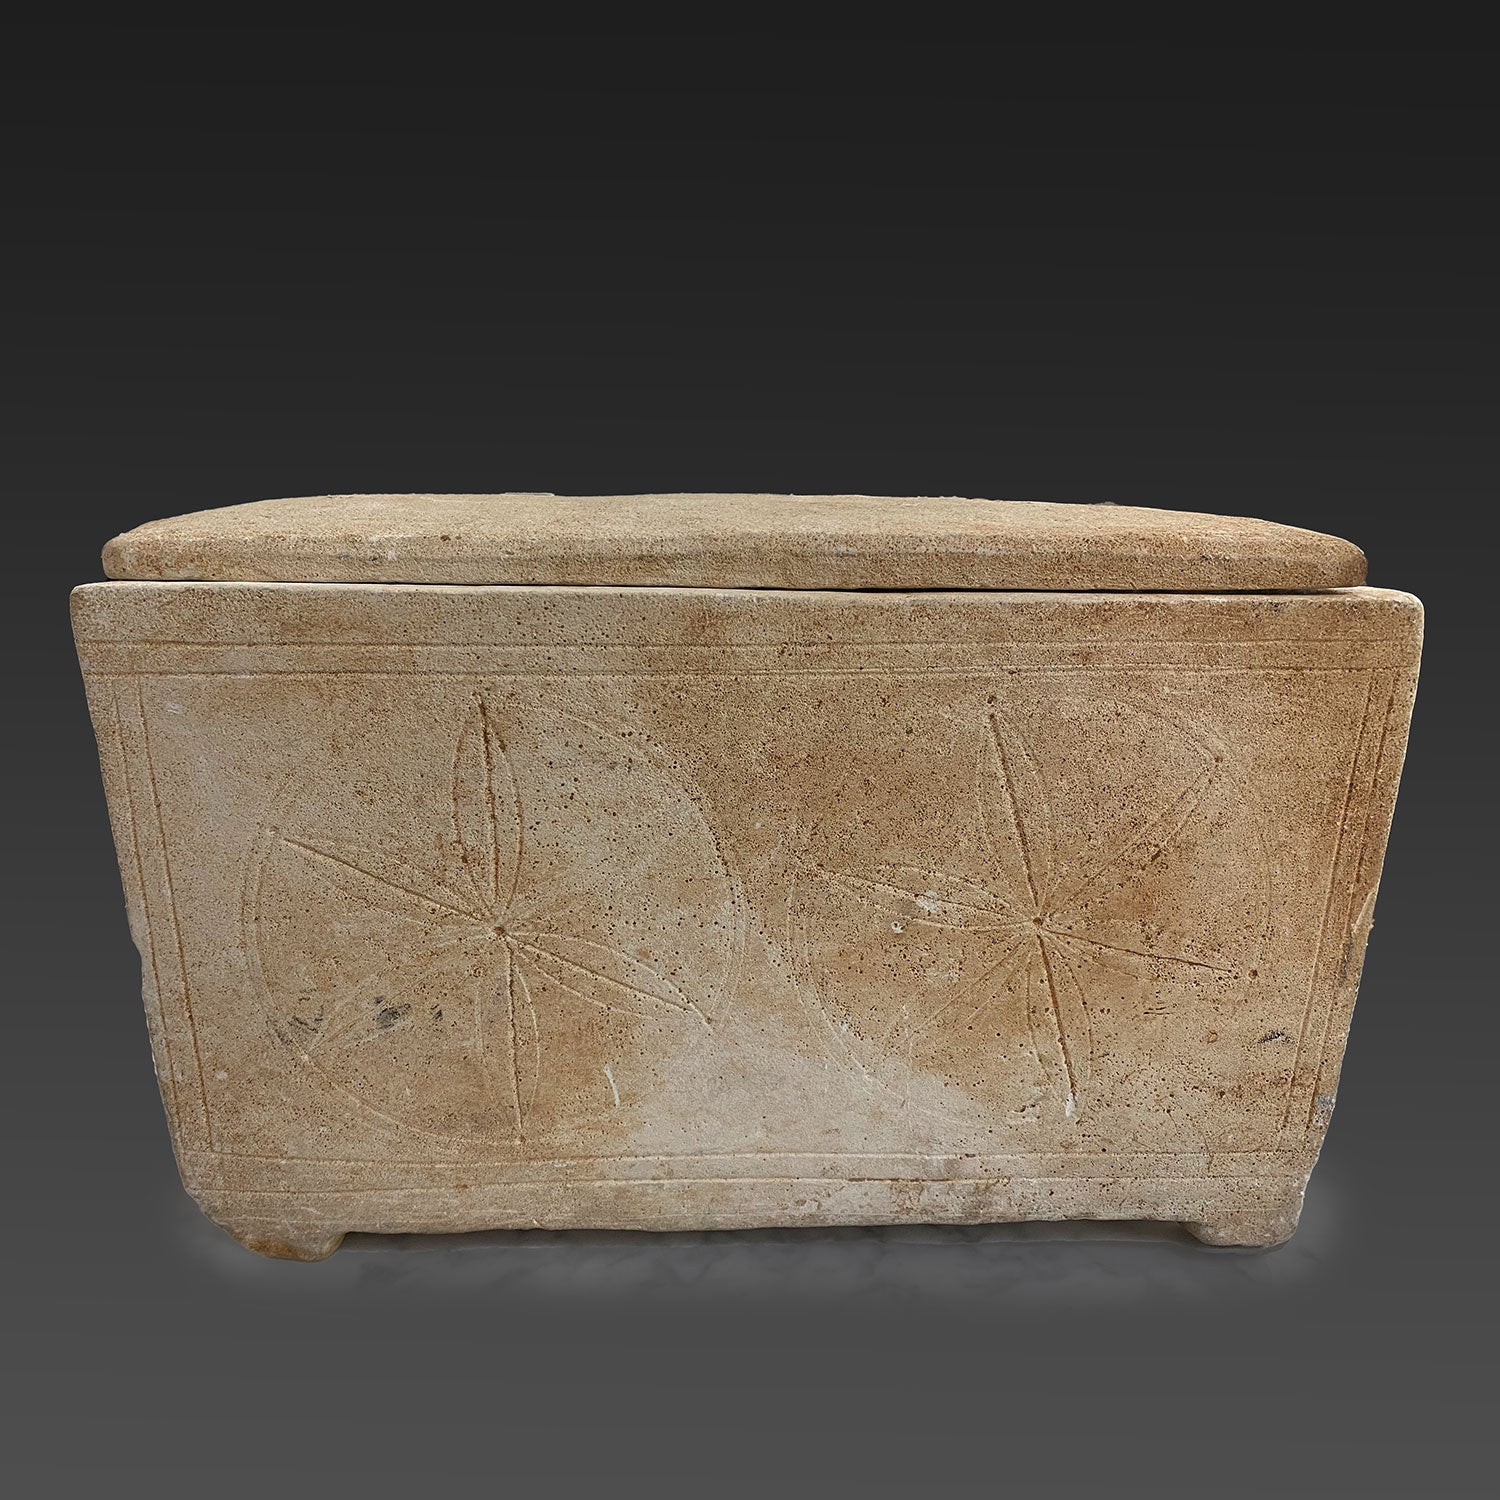 An early Jewish Limestone Ossuary with Lid, ca. 1st century BCE - 1st century CE